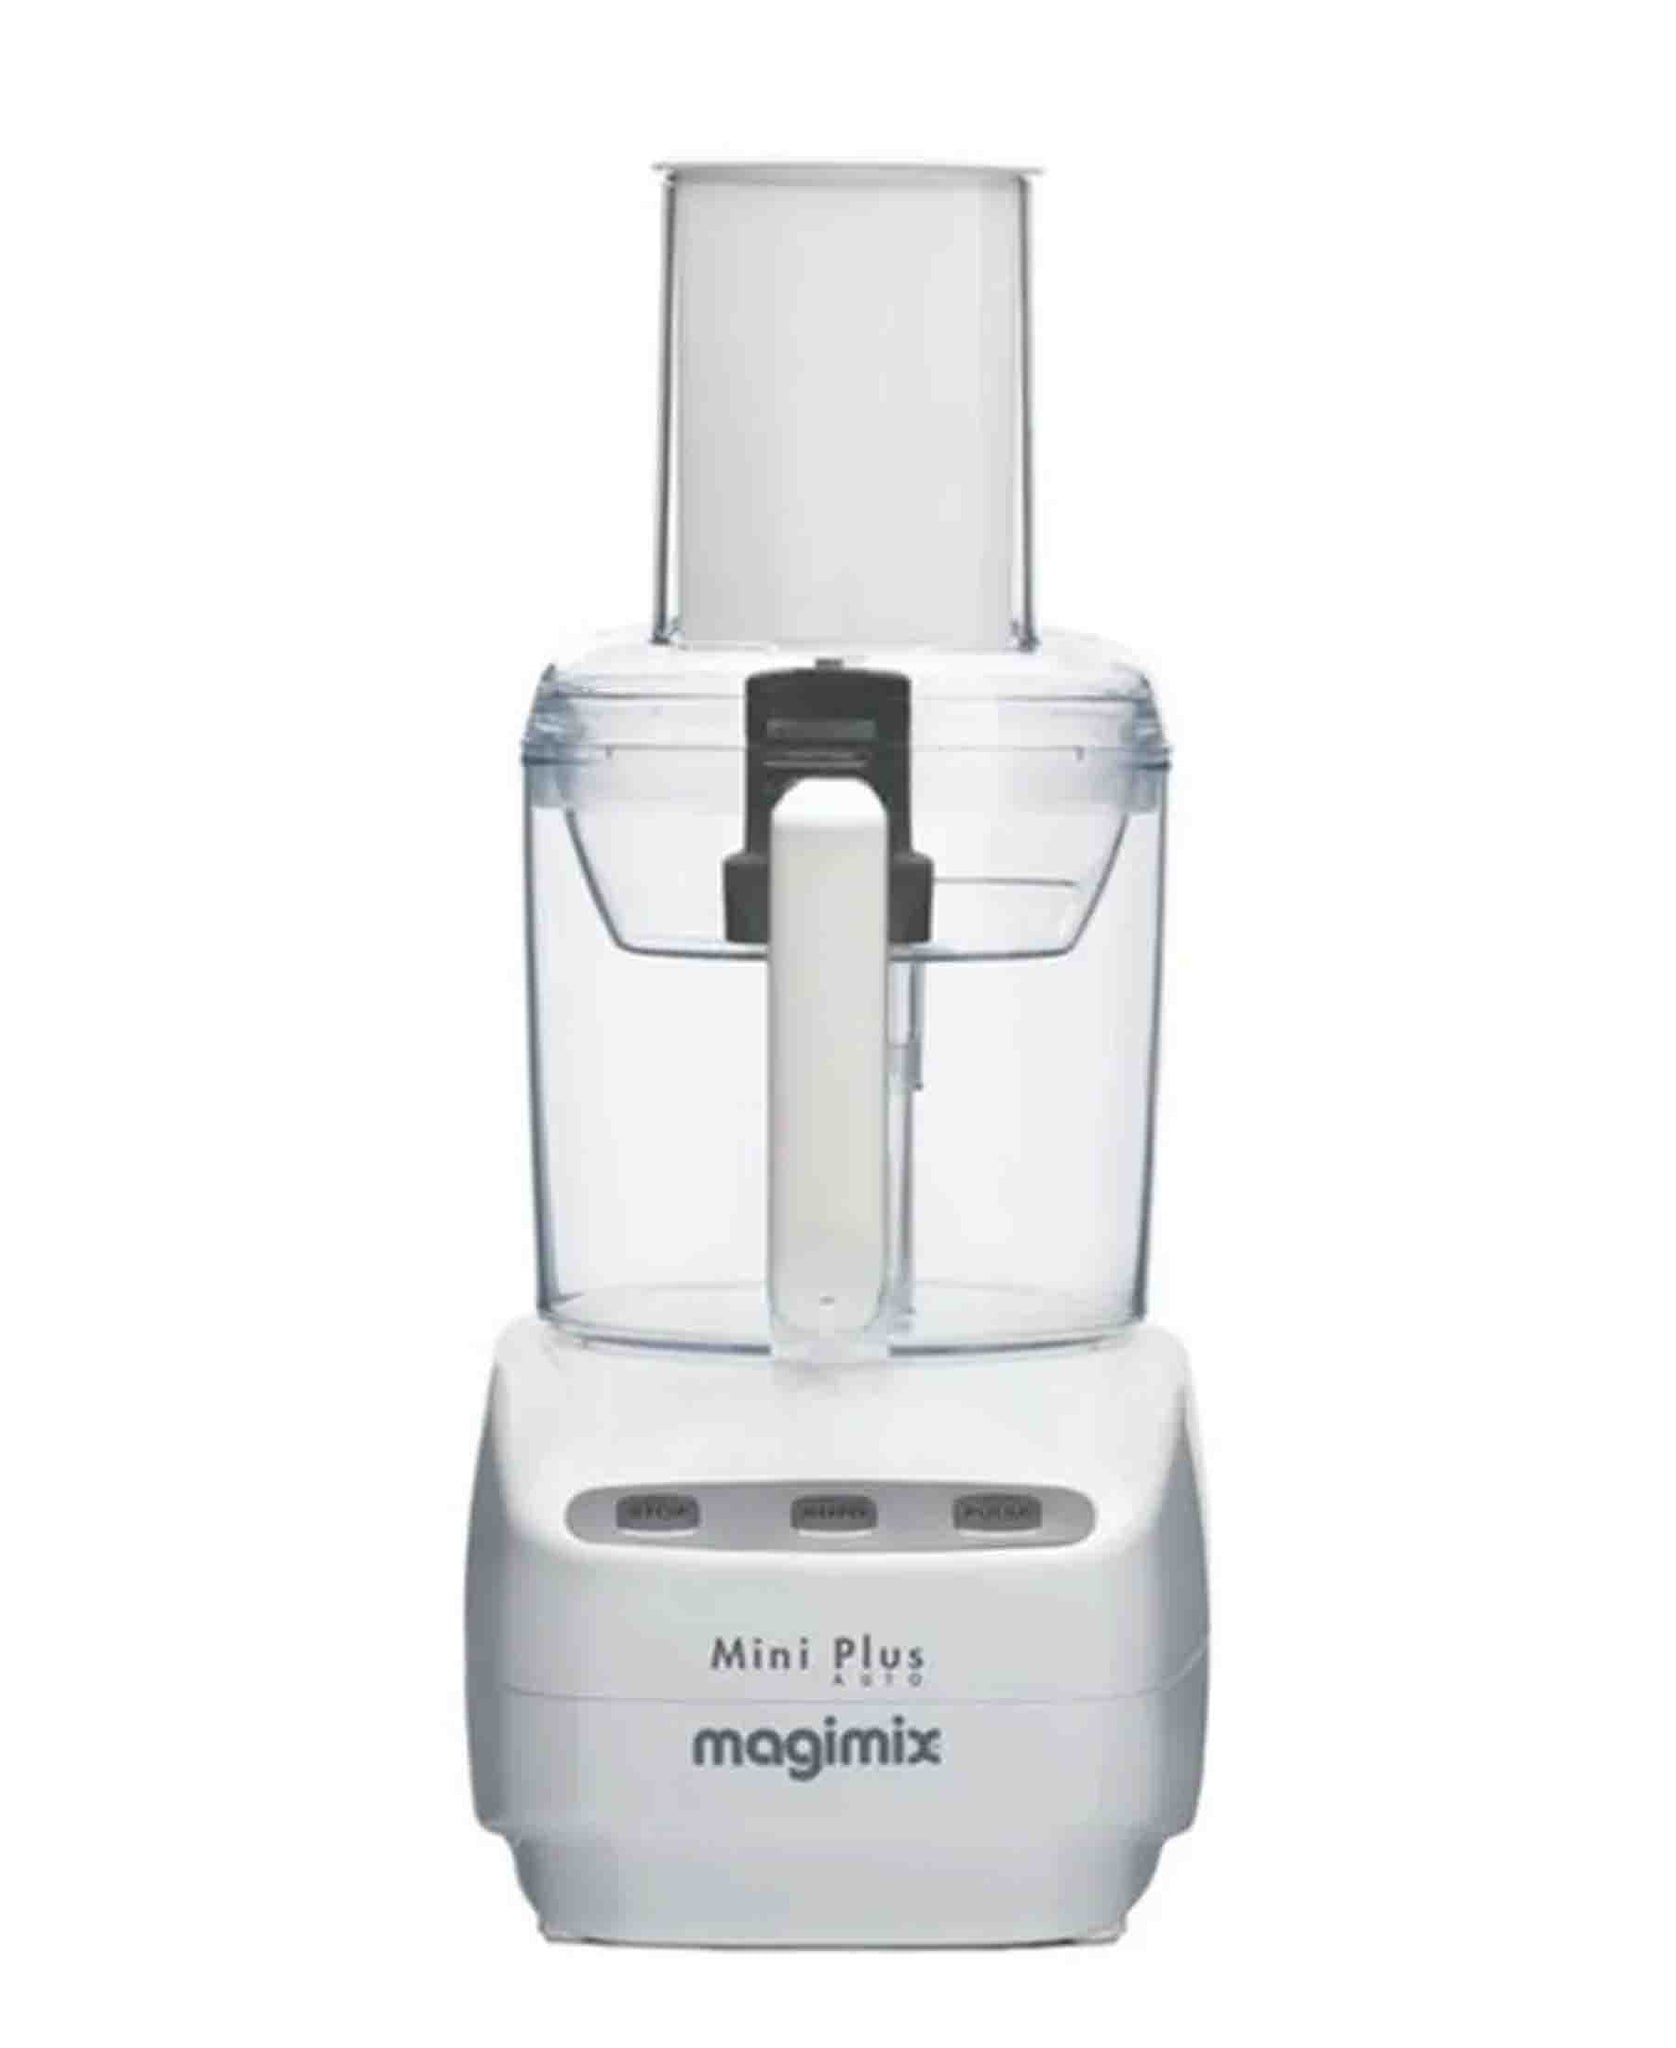 Magimix Le Mini Plus 1.7L Food Processor - White